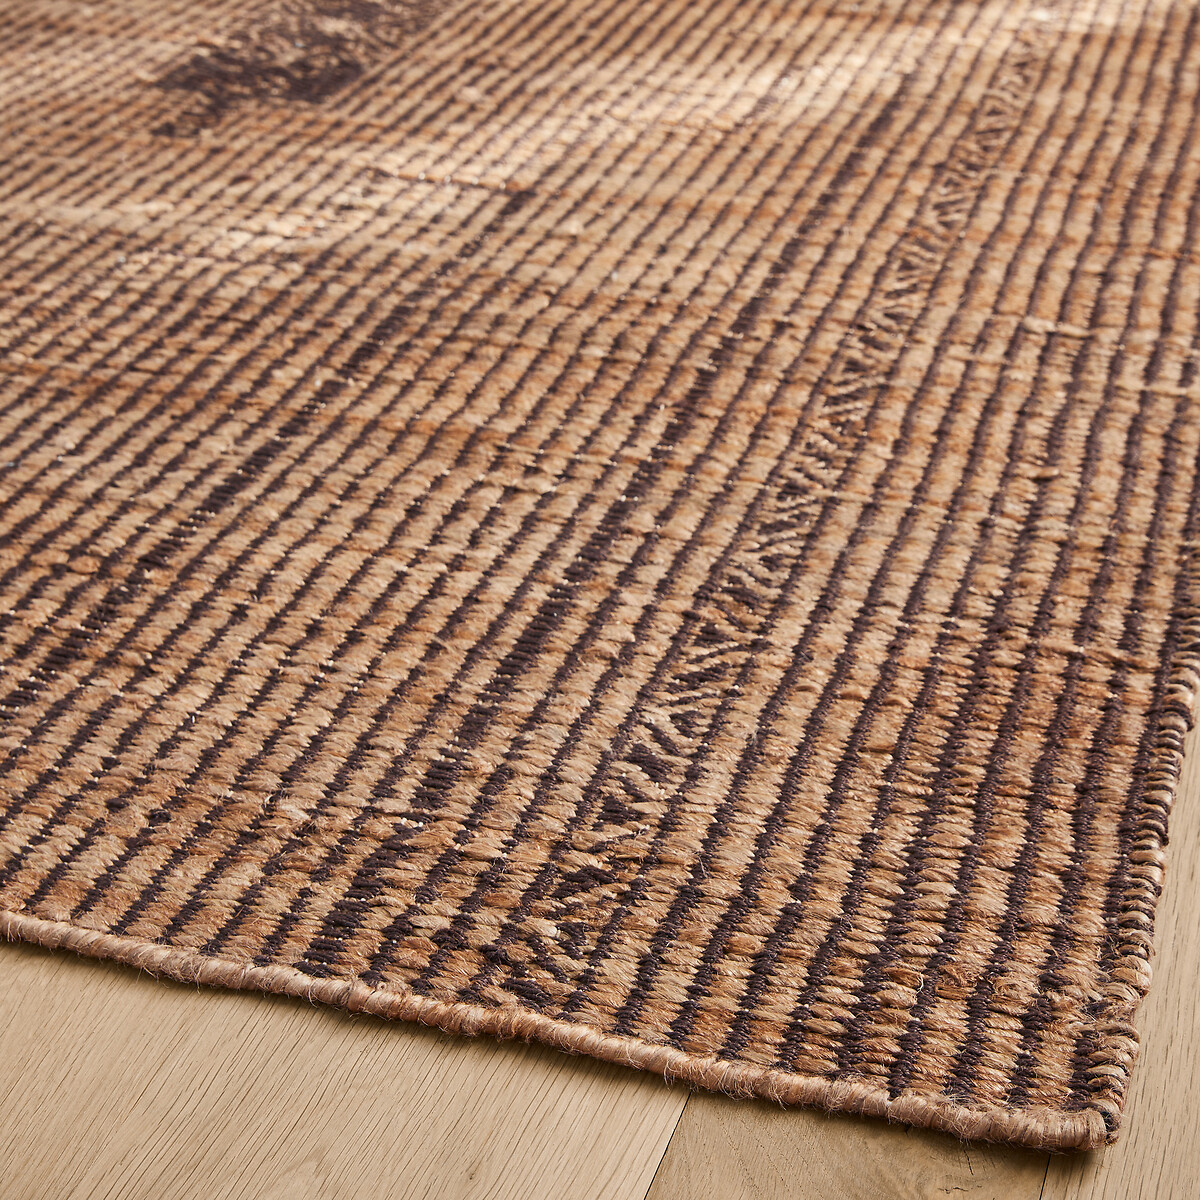 Ковер из плетеной ткани из джута и хлопка Jutiss  120 x 180 см бежевый LaRedoute, размер 120 x 180 см - фото 3